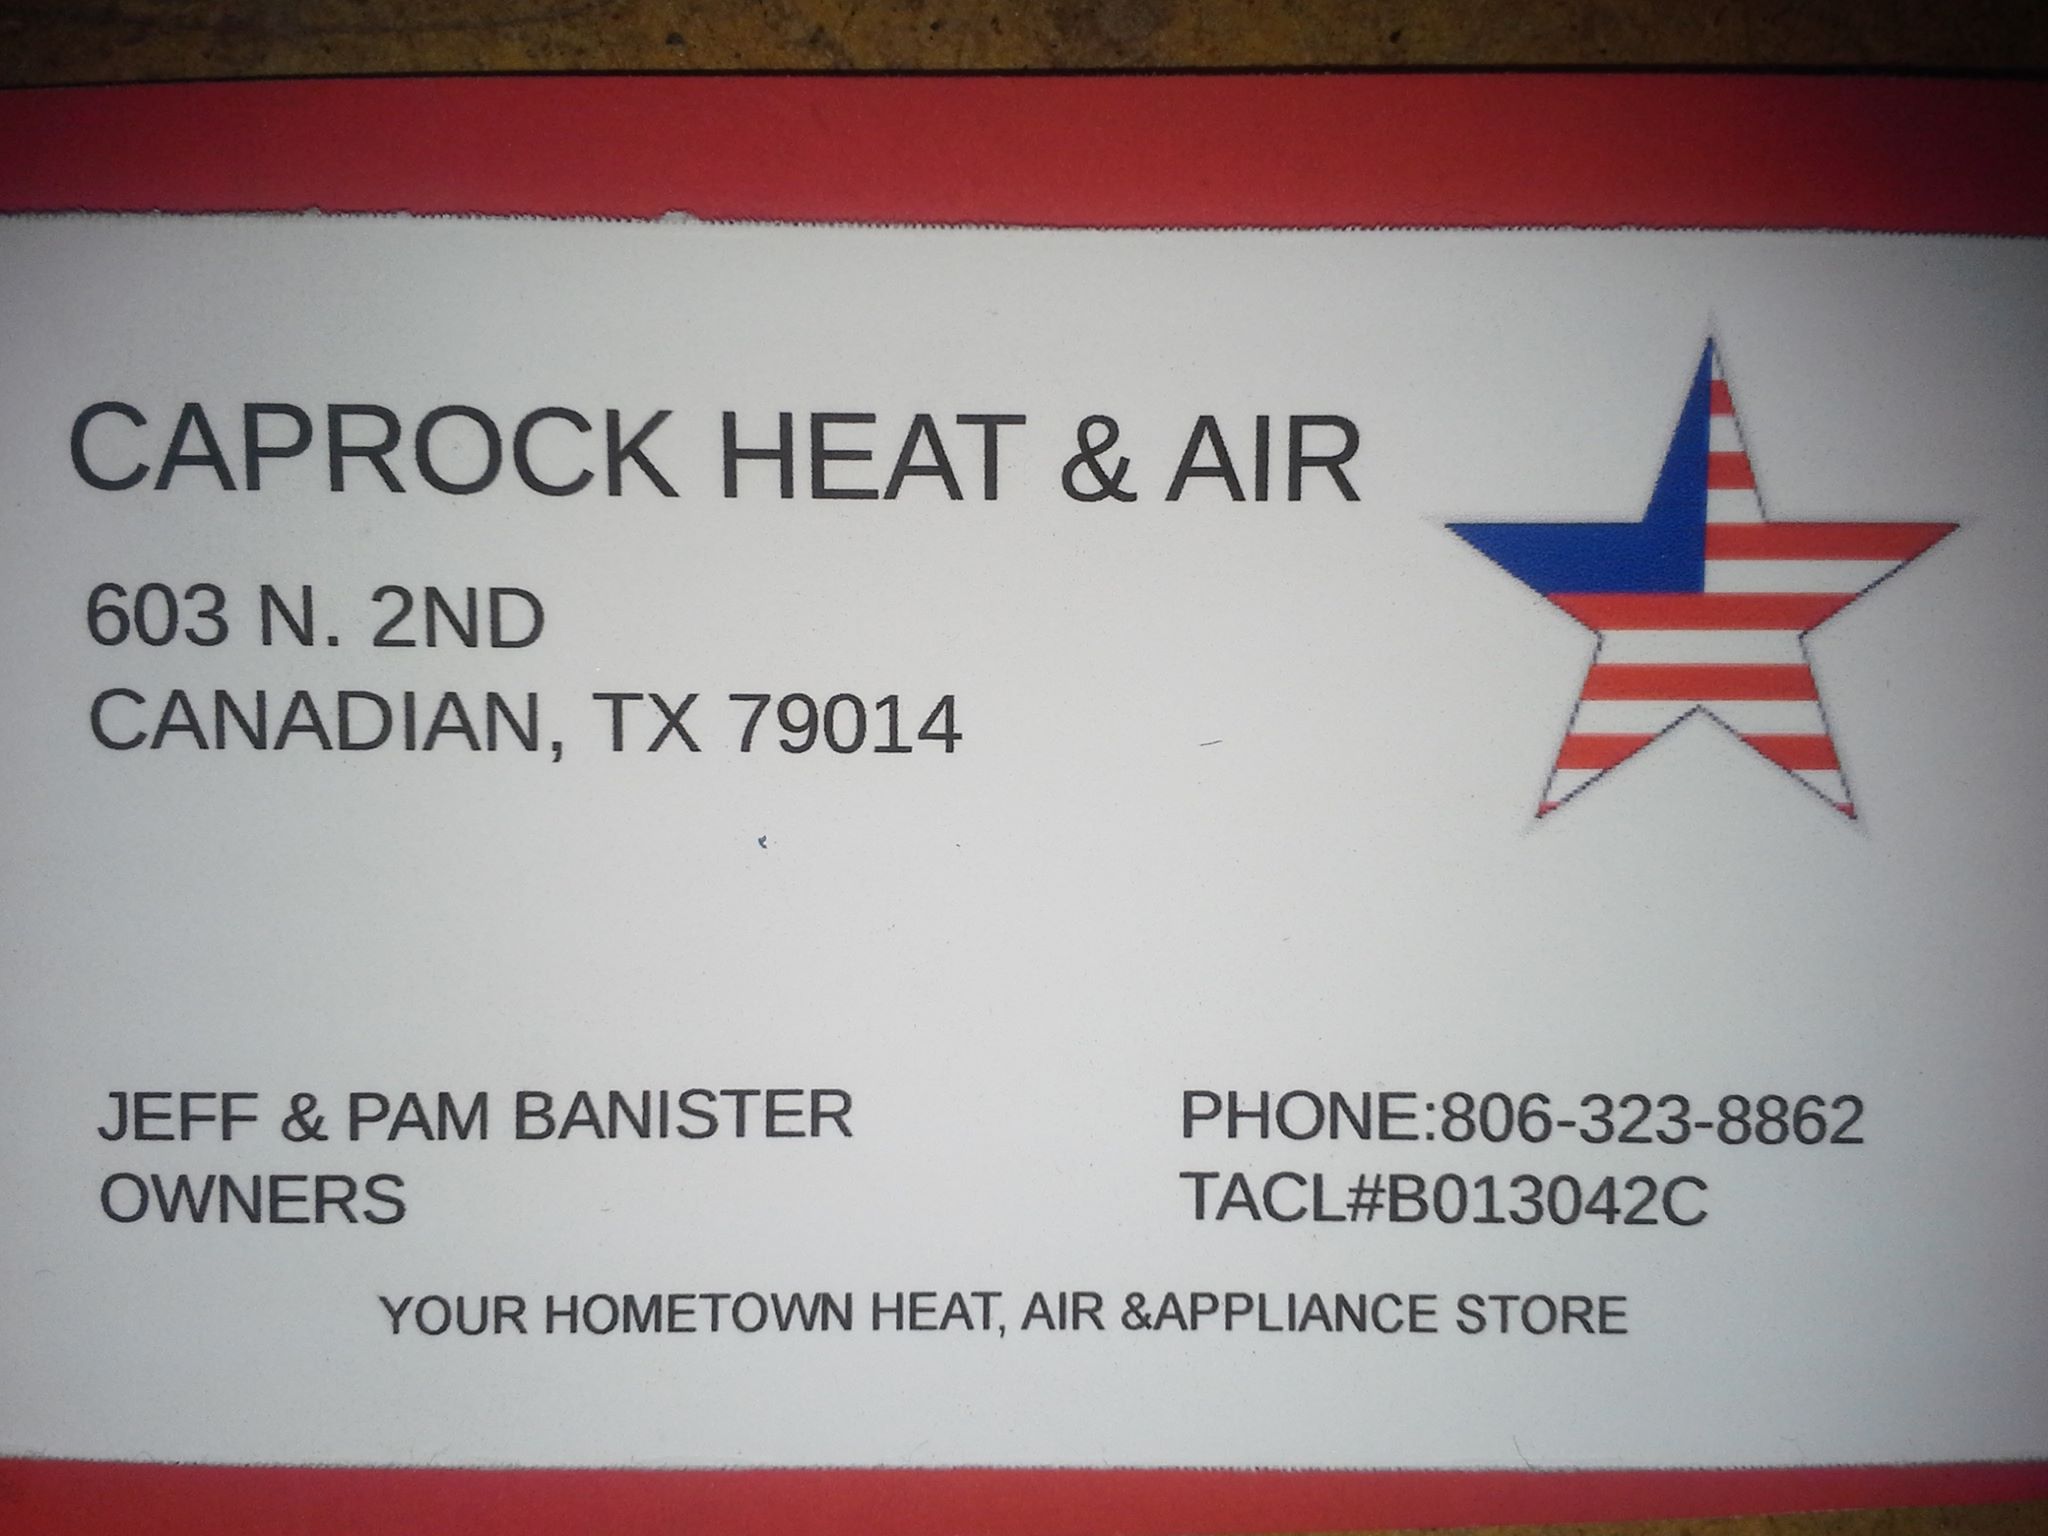 Caprock Heat & Air 603 N 2nd St, Canadian Texas 79014